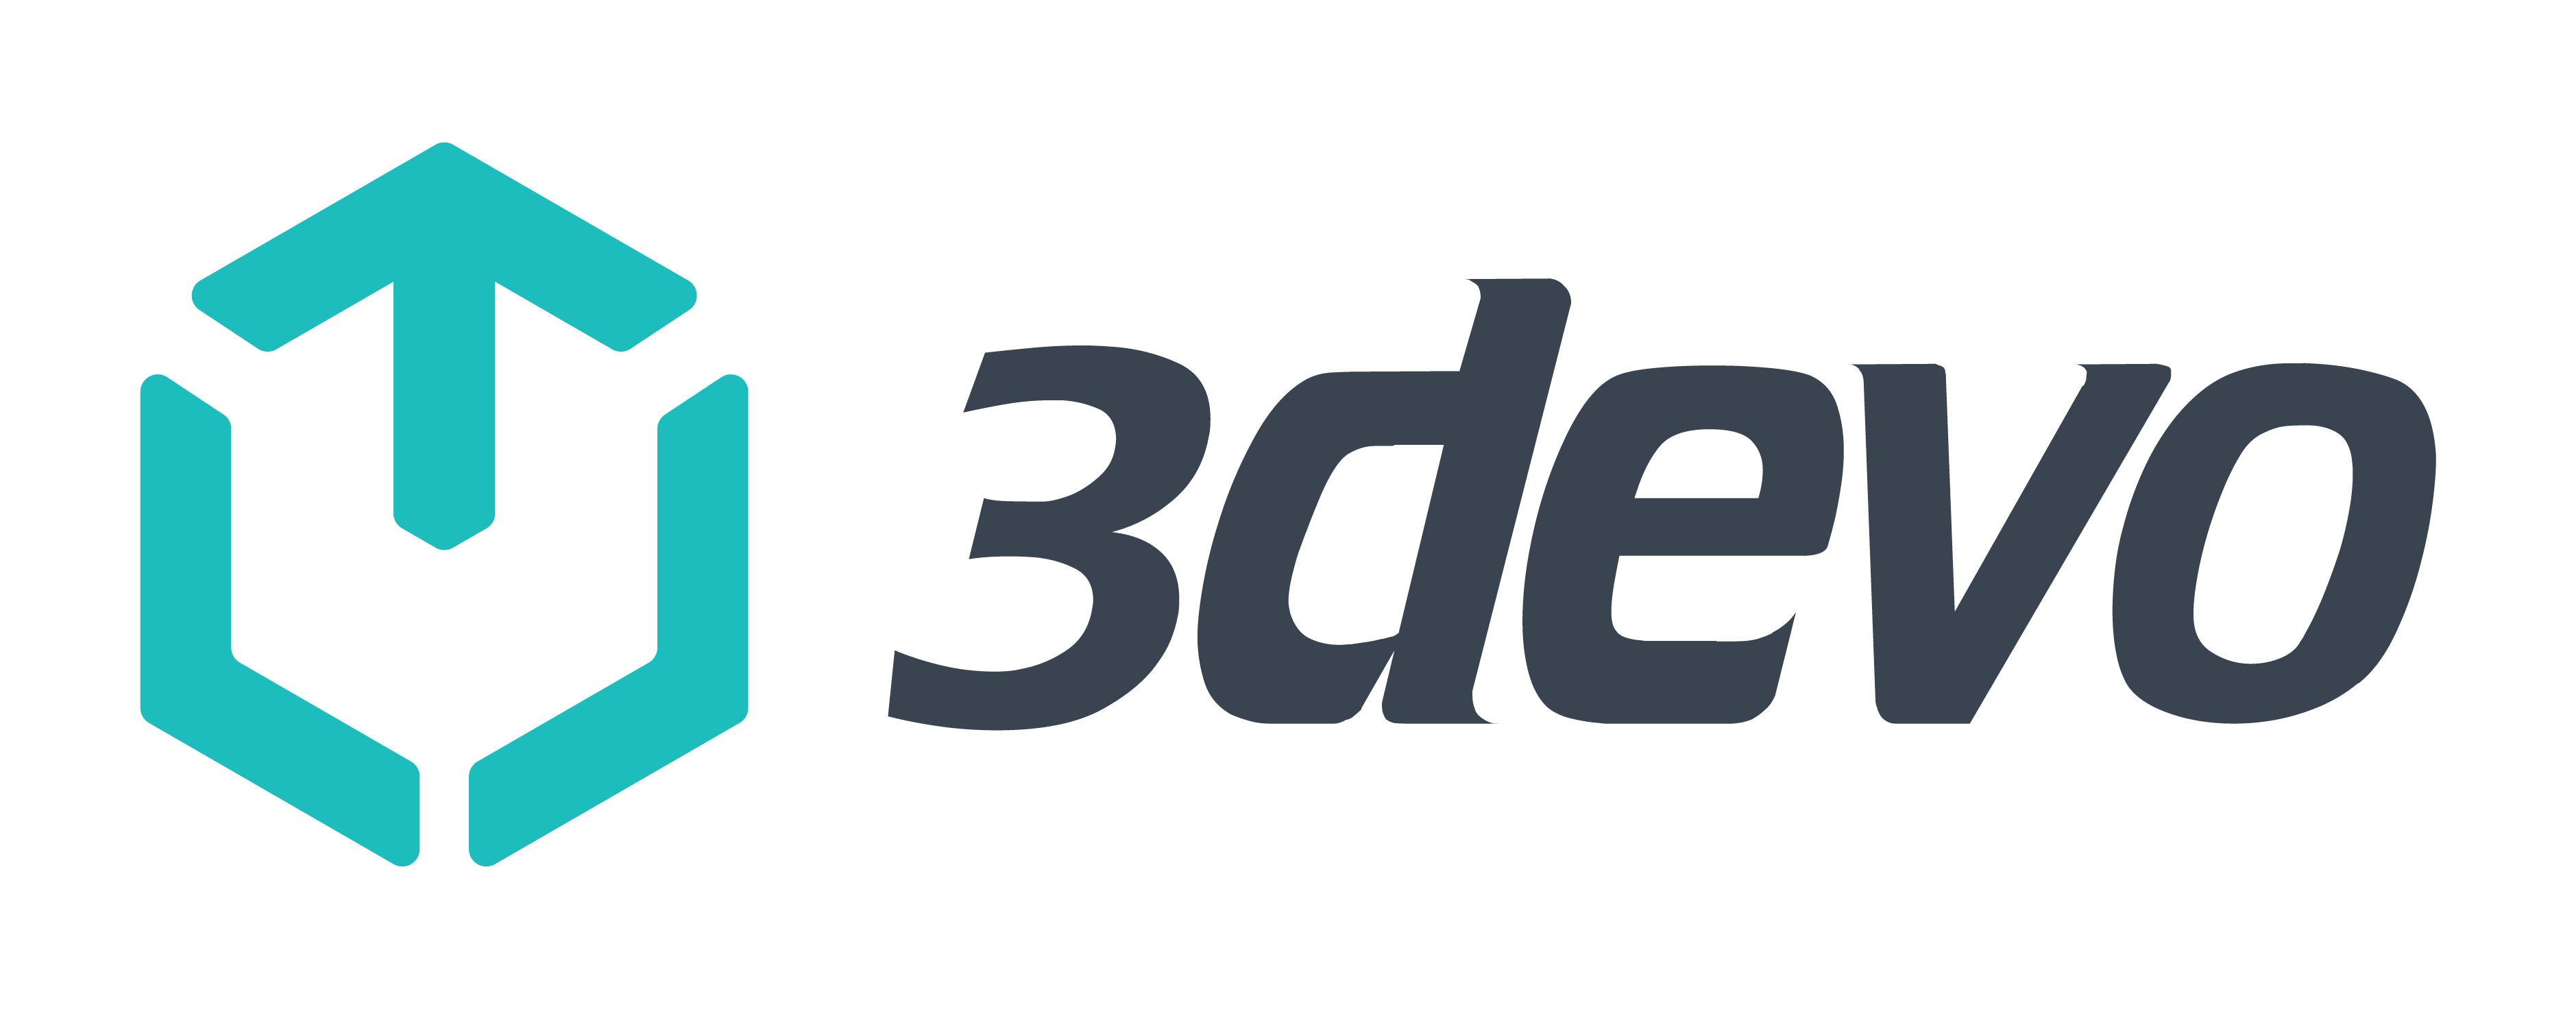 3devo New Logo